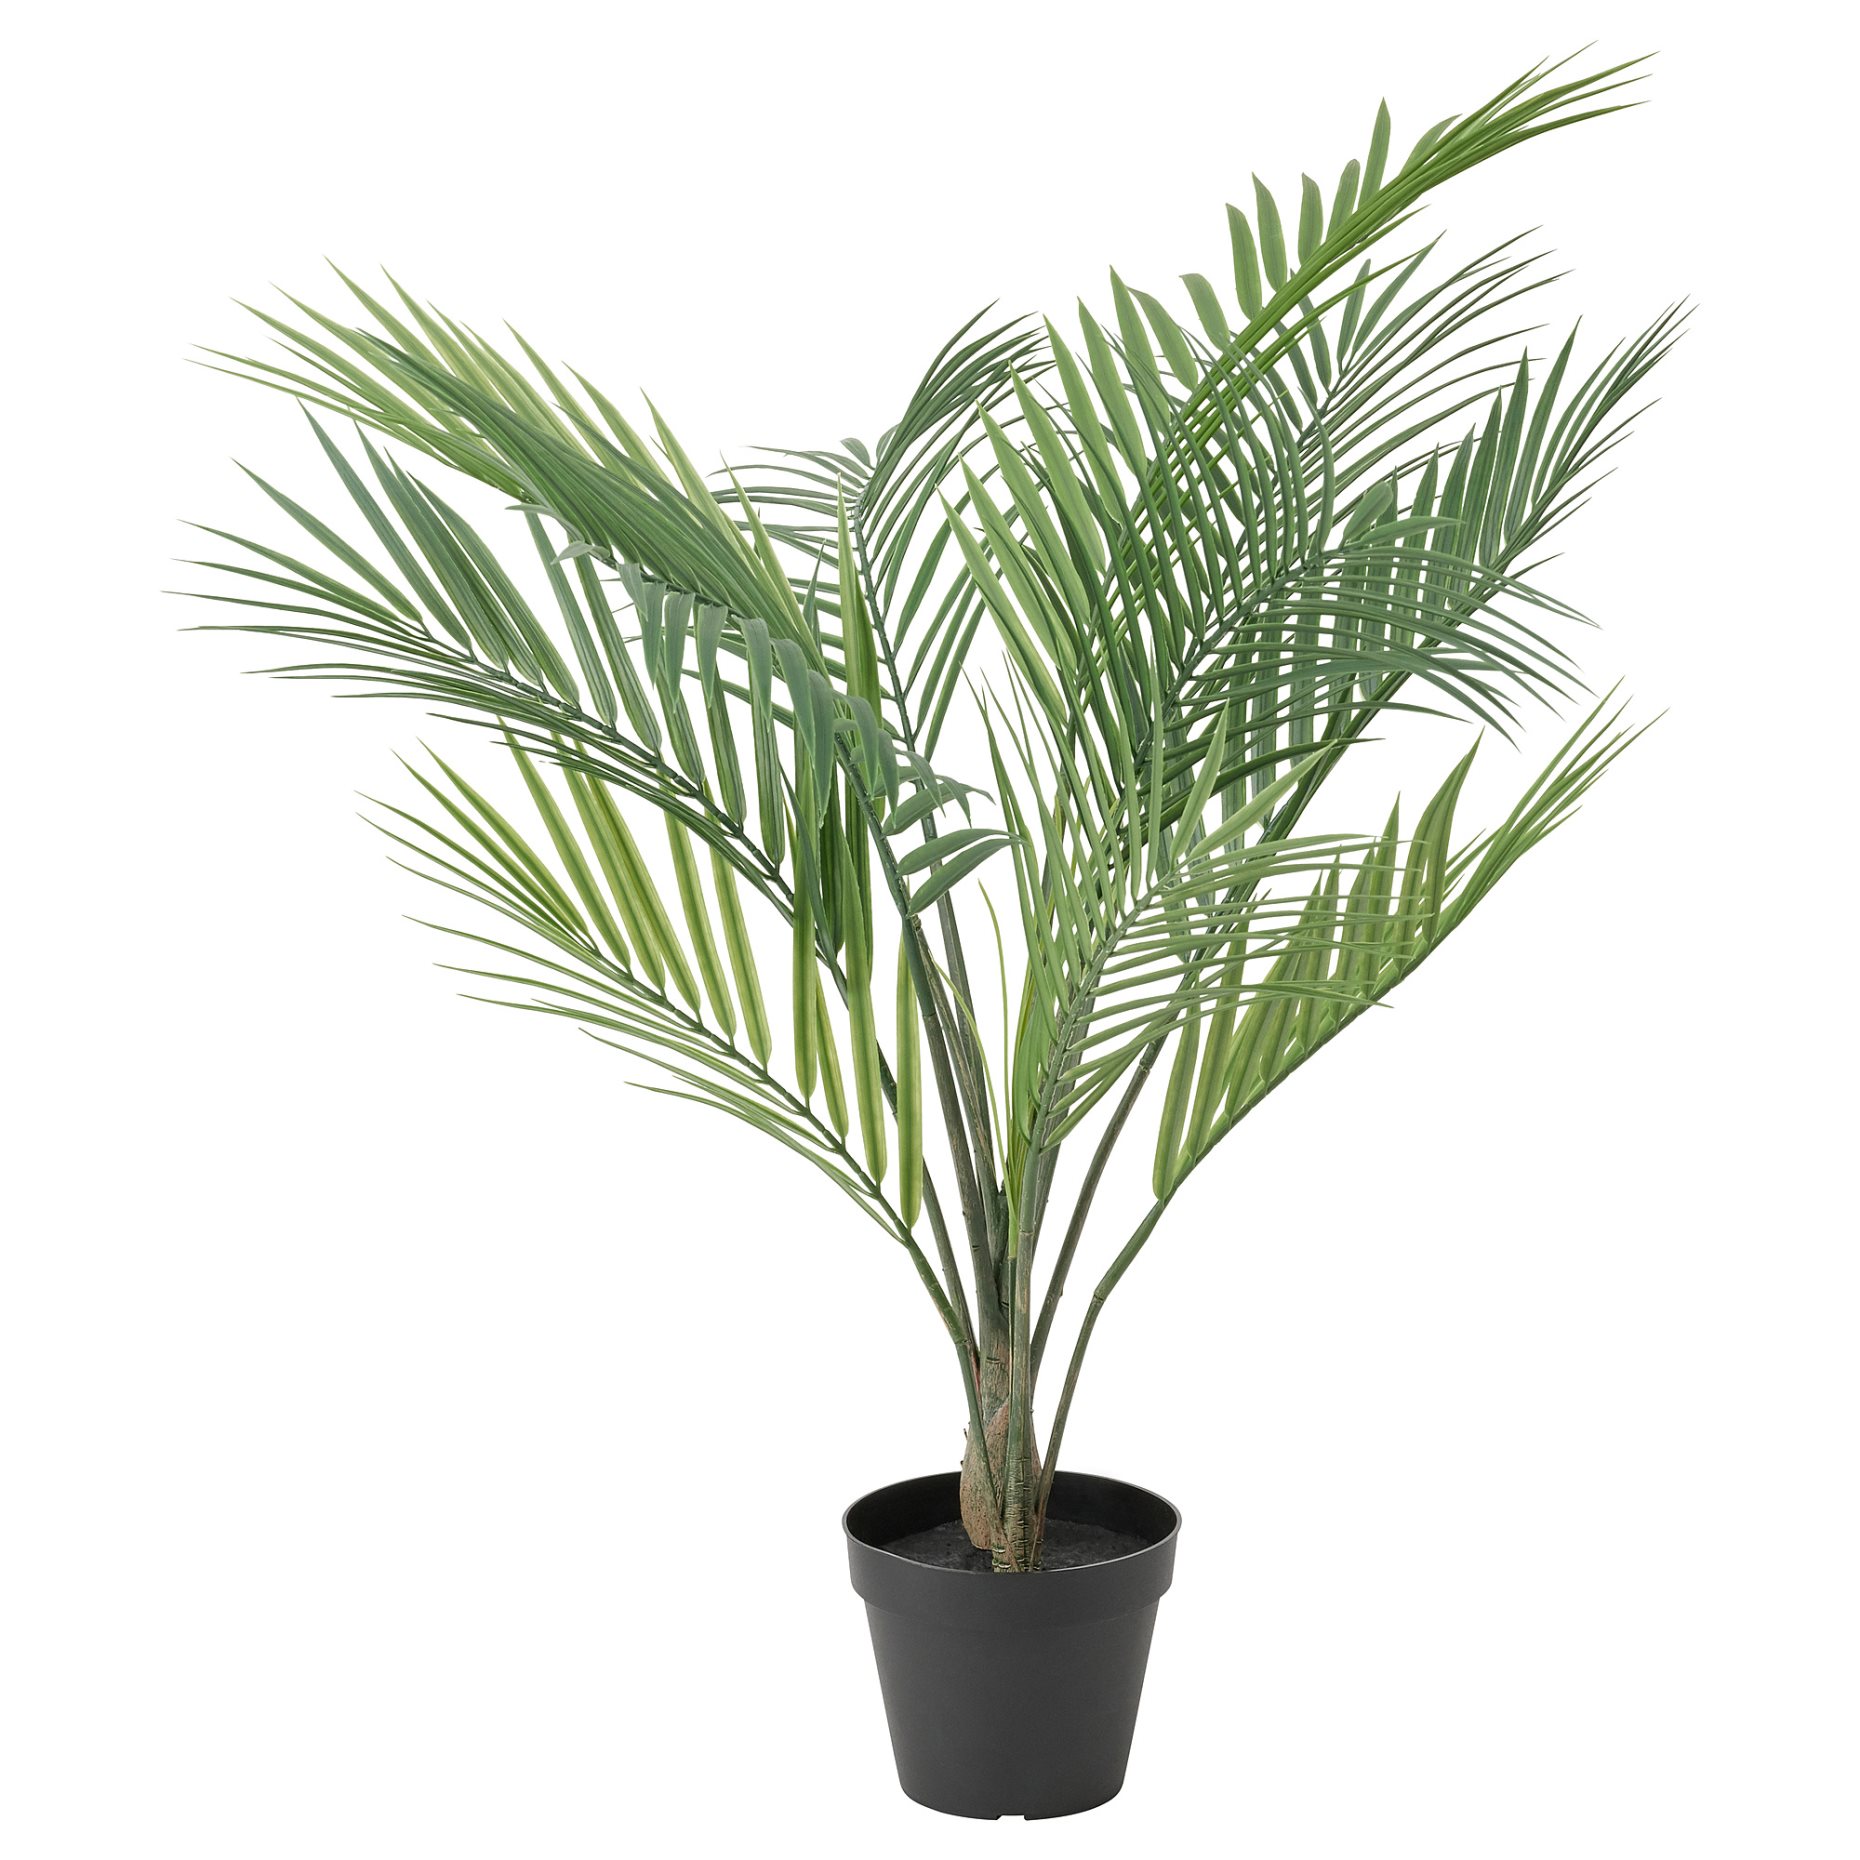 FEJKA, τεχνητό φυτό σε γλάστρα εσωτ./εξωτ. χώρου/ Αρέκα, 12 cm, 305.084.03